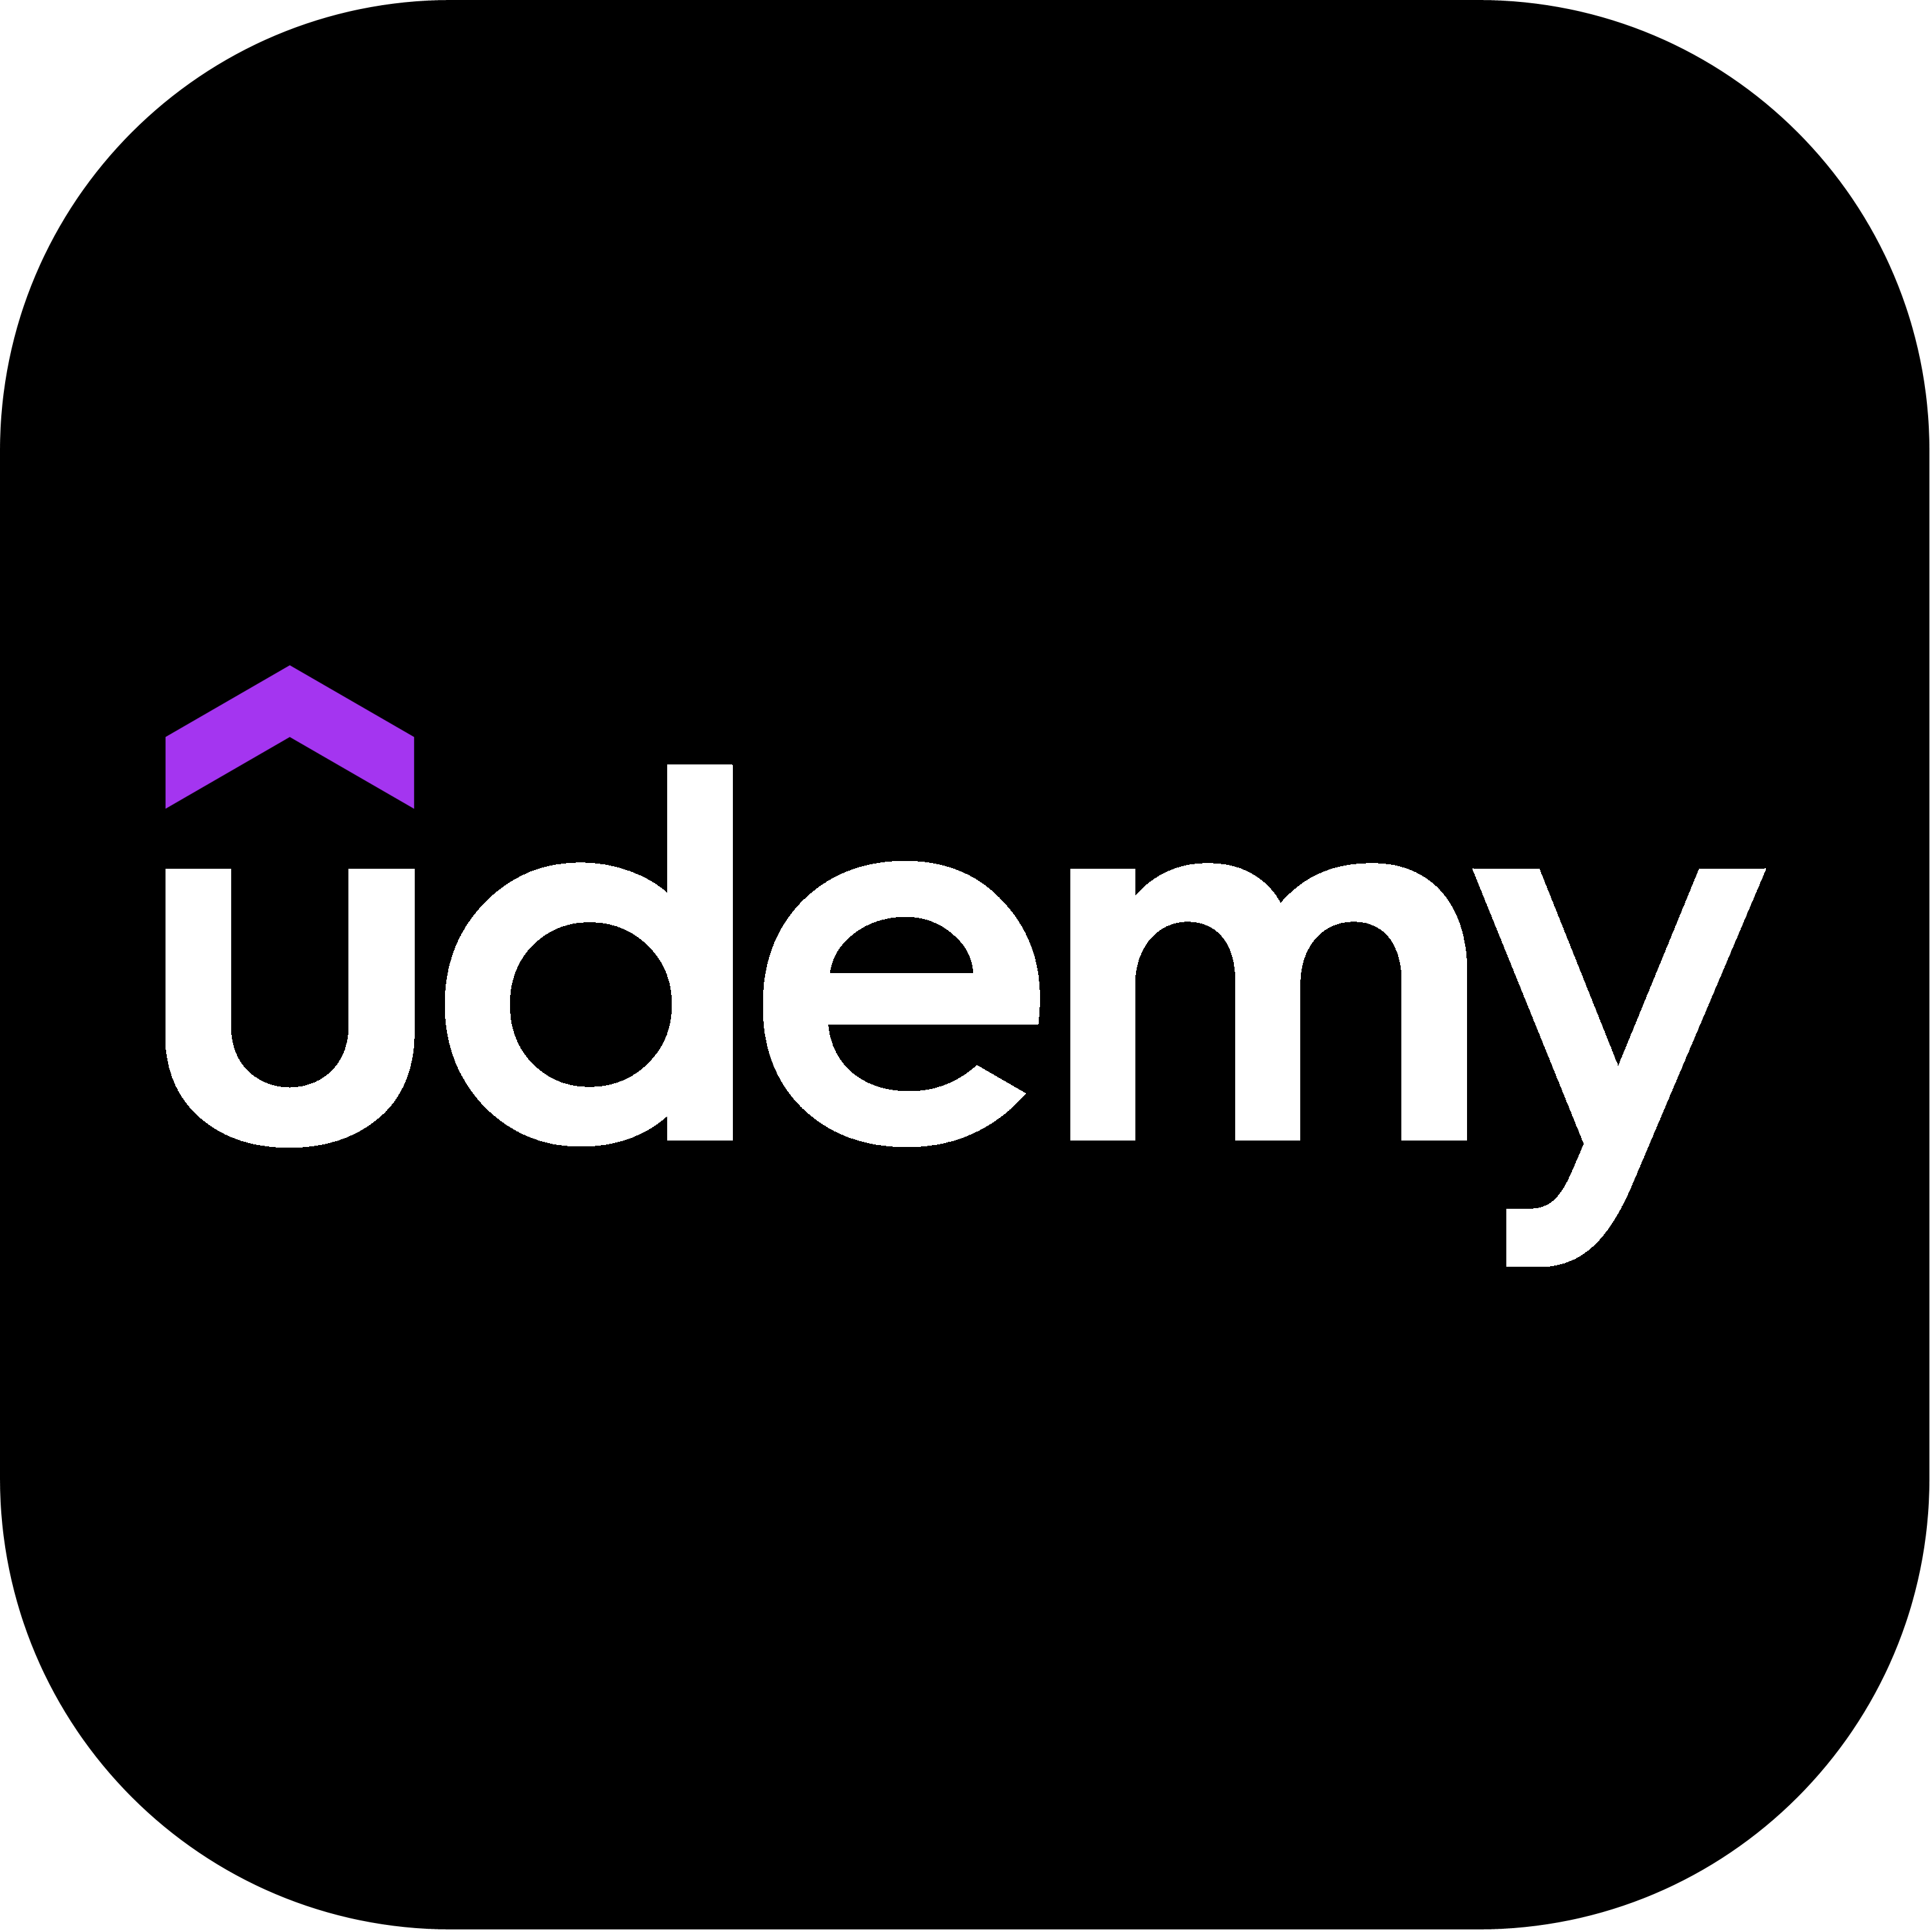 Udemy Logo Transparent Picture